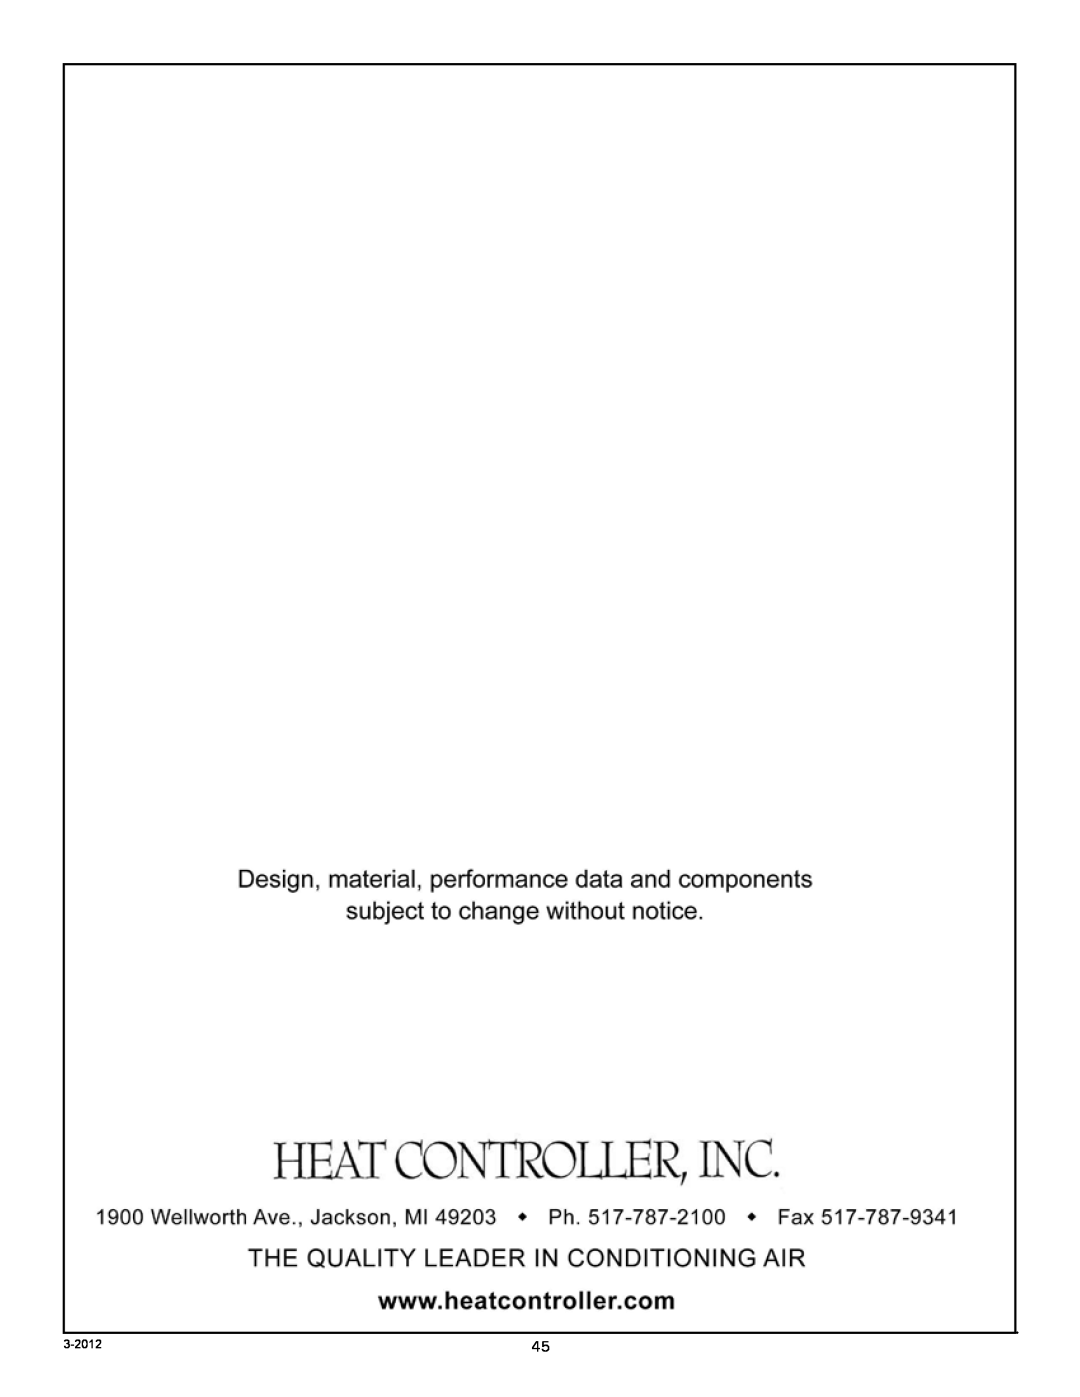 Heat Controller VMH24SC-1, VMH12SC-1, VMH09SC-1, VMH18SC-1 service manual VMH Series, Heat Controller, Inc 